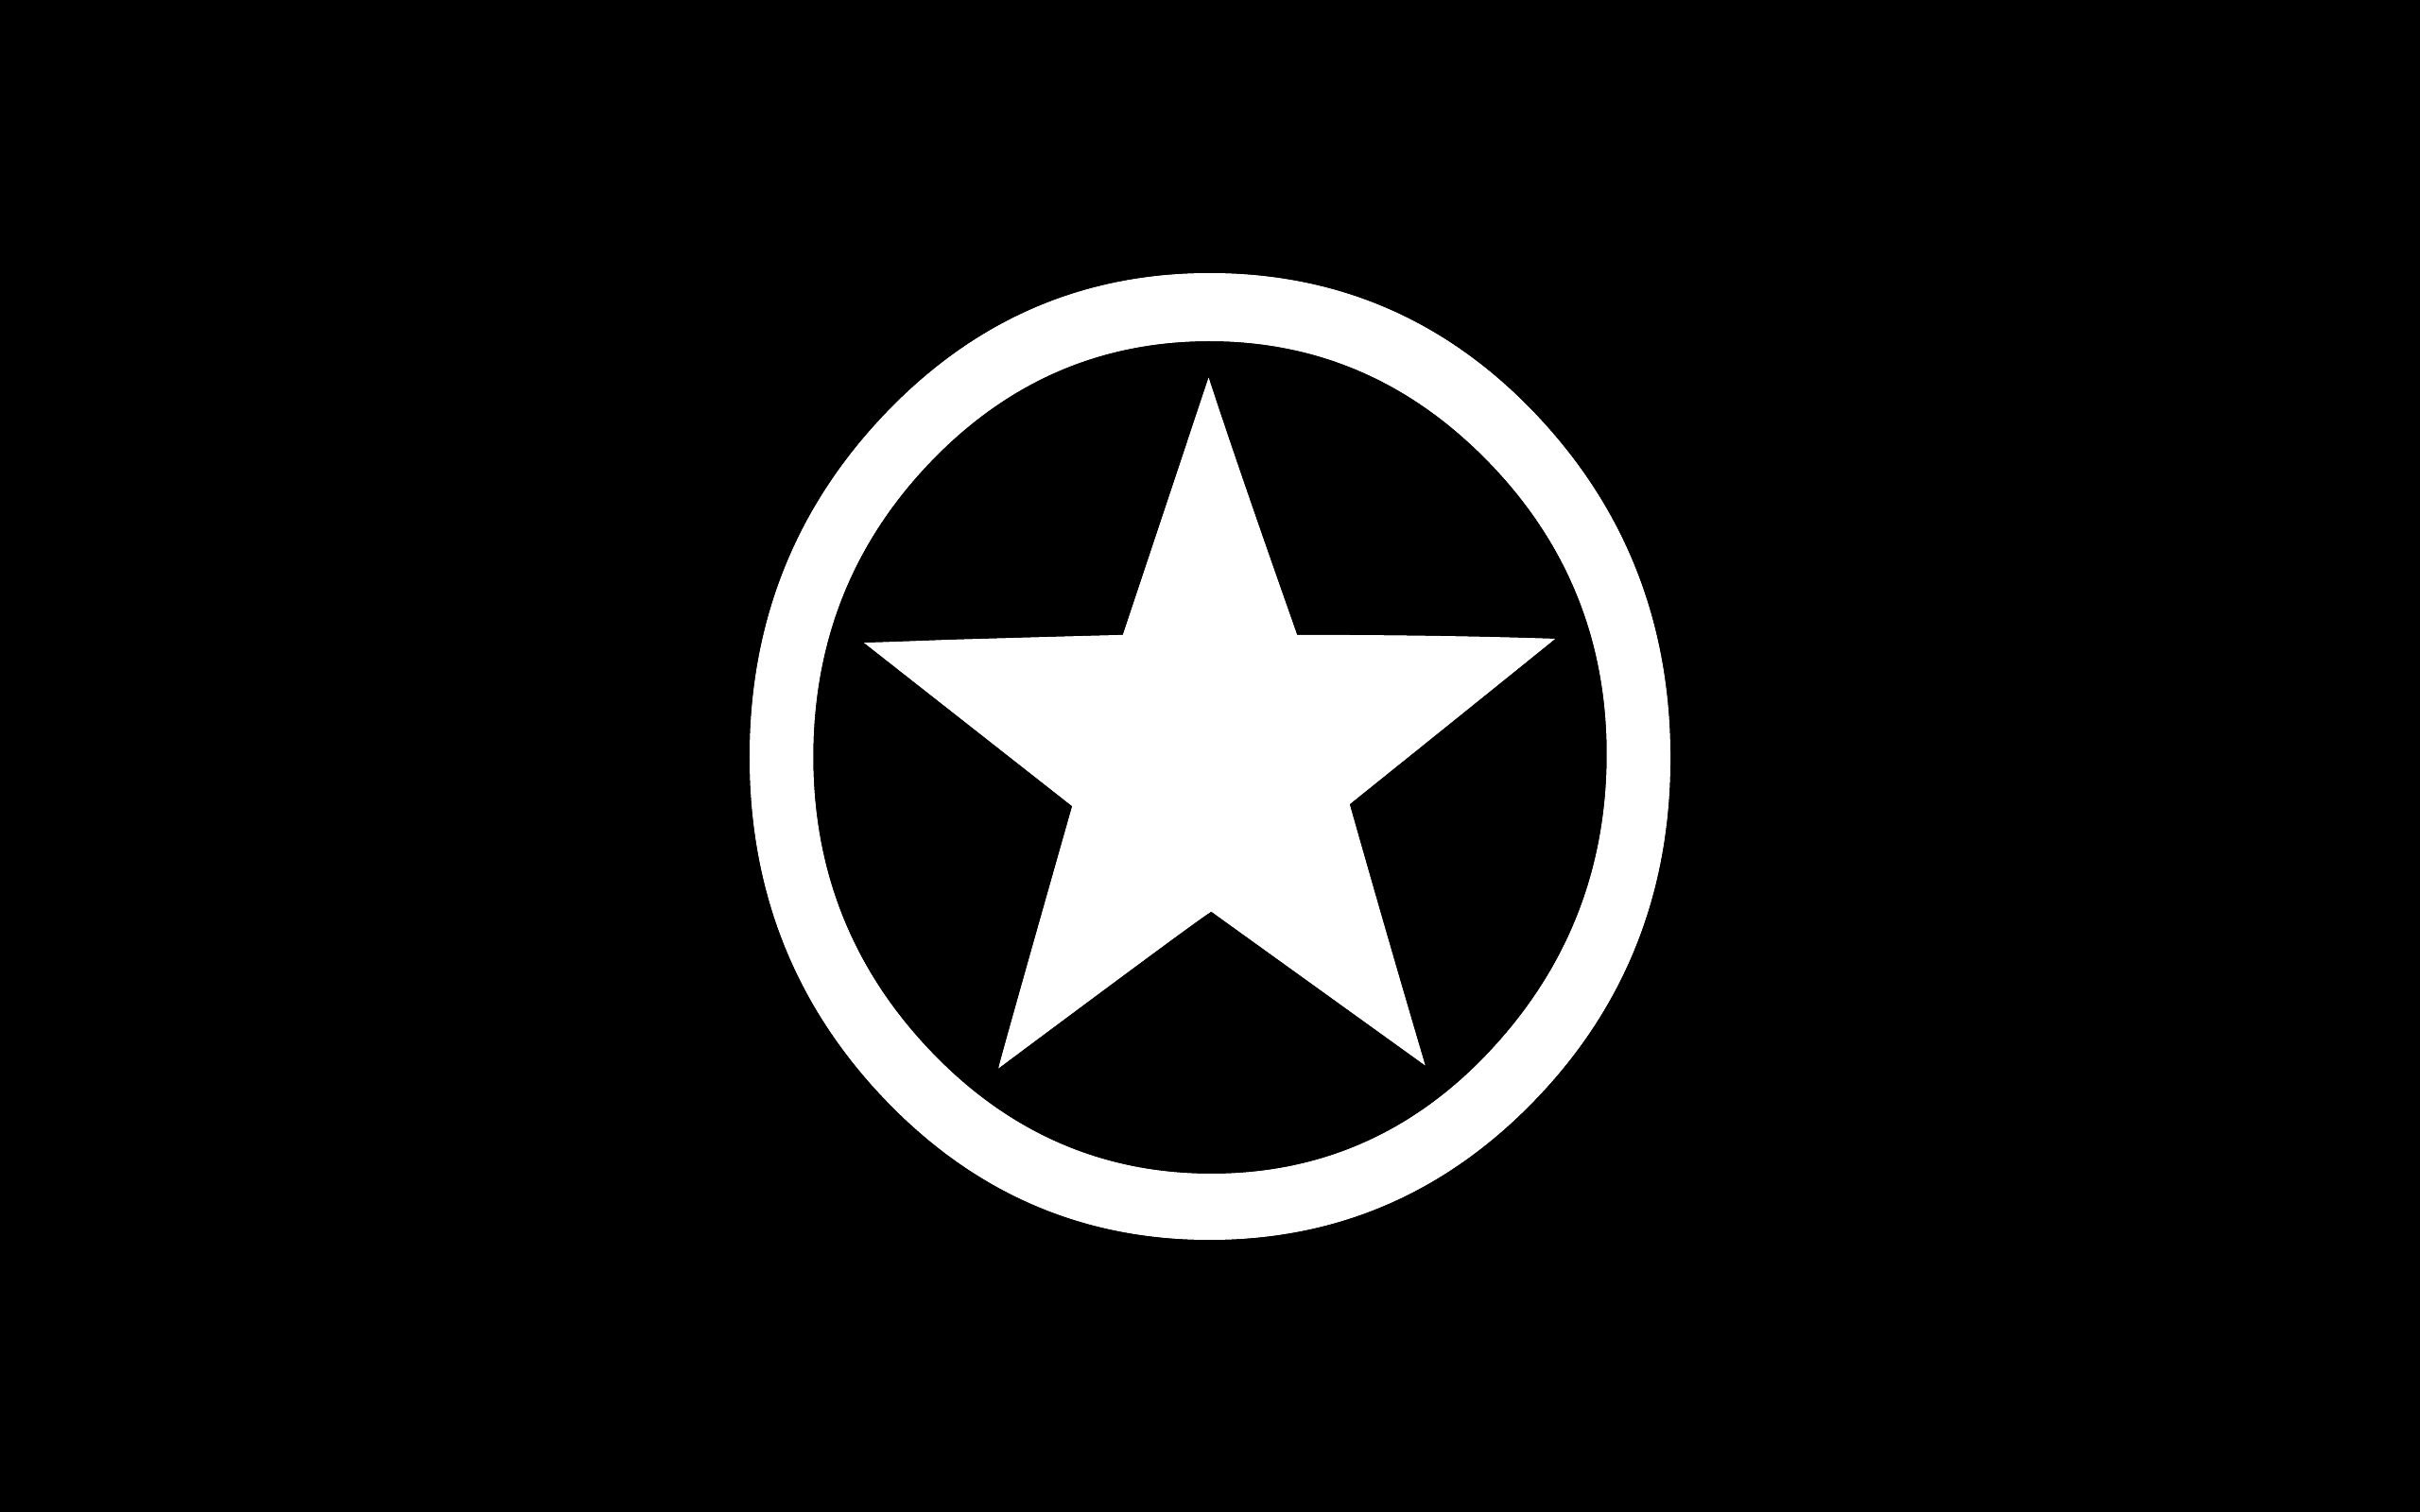 Black Star with Circle around Logo - Free Black Star Logo, Download Free Clip Art, Free Clip Art on ...